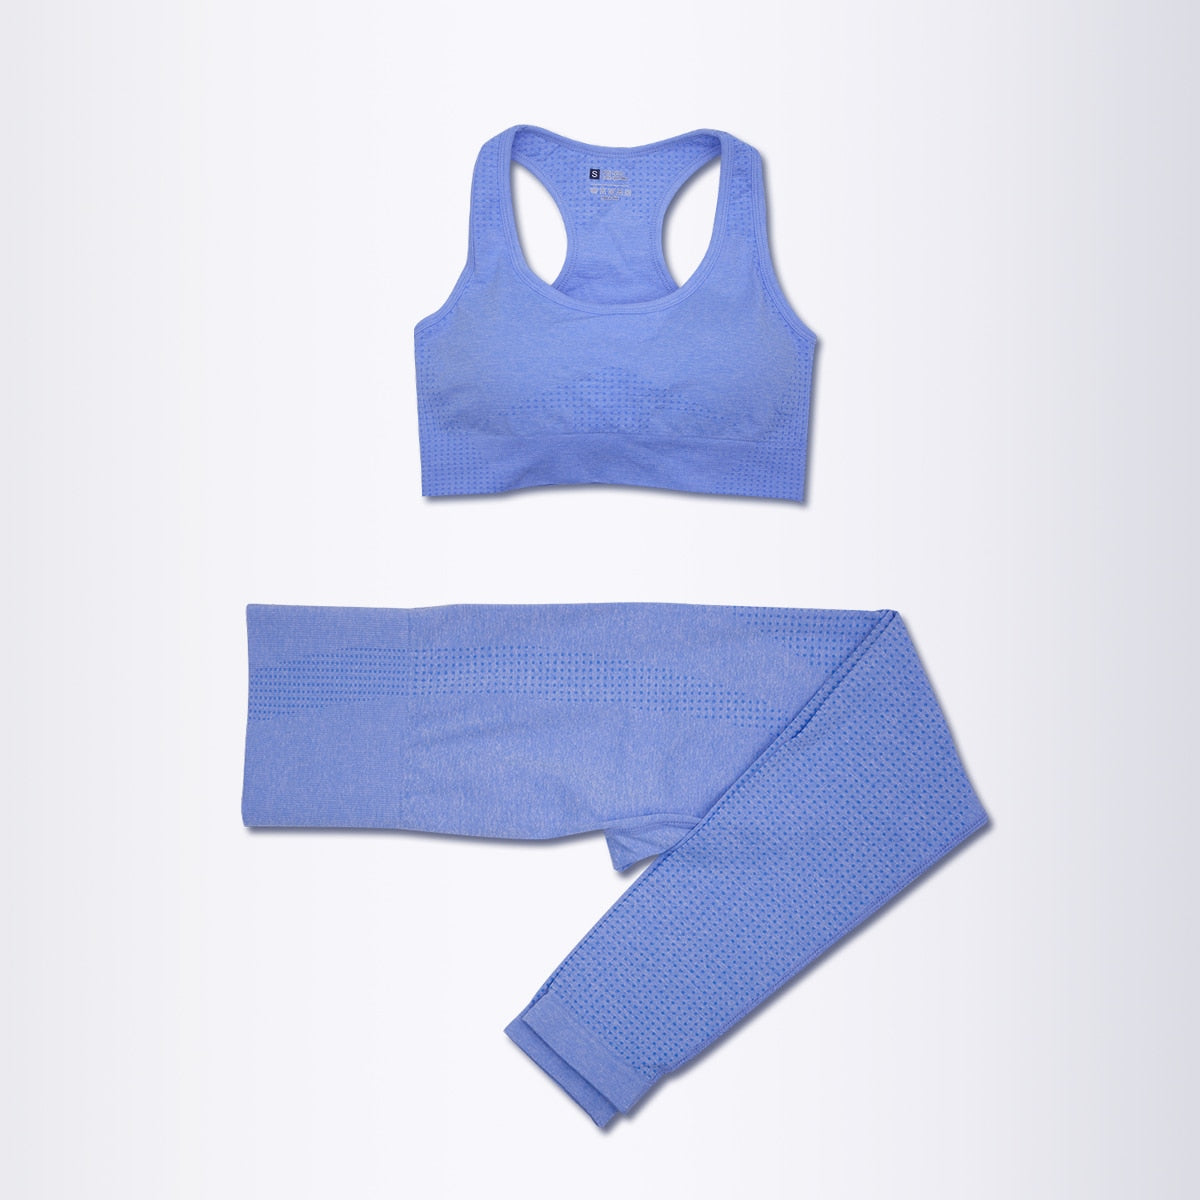 Women's 2 Piece Seamless Blue Yoga Activewear Set